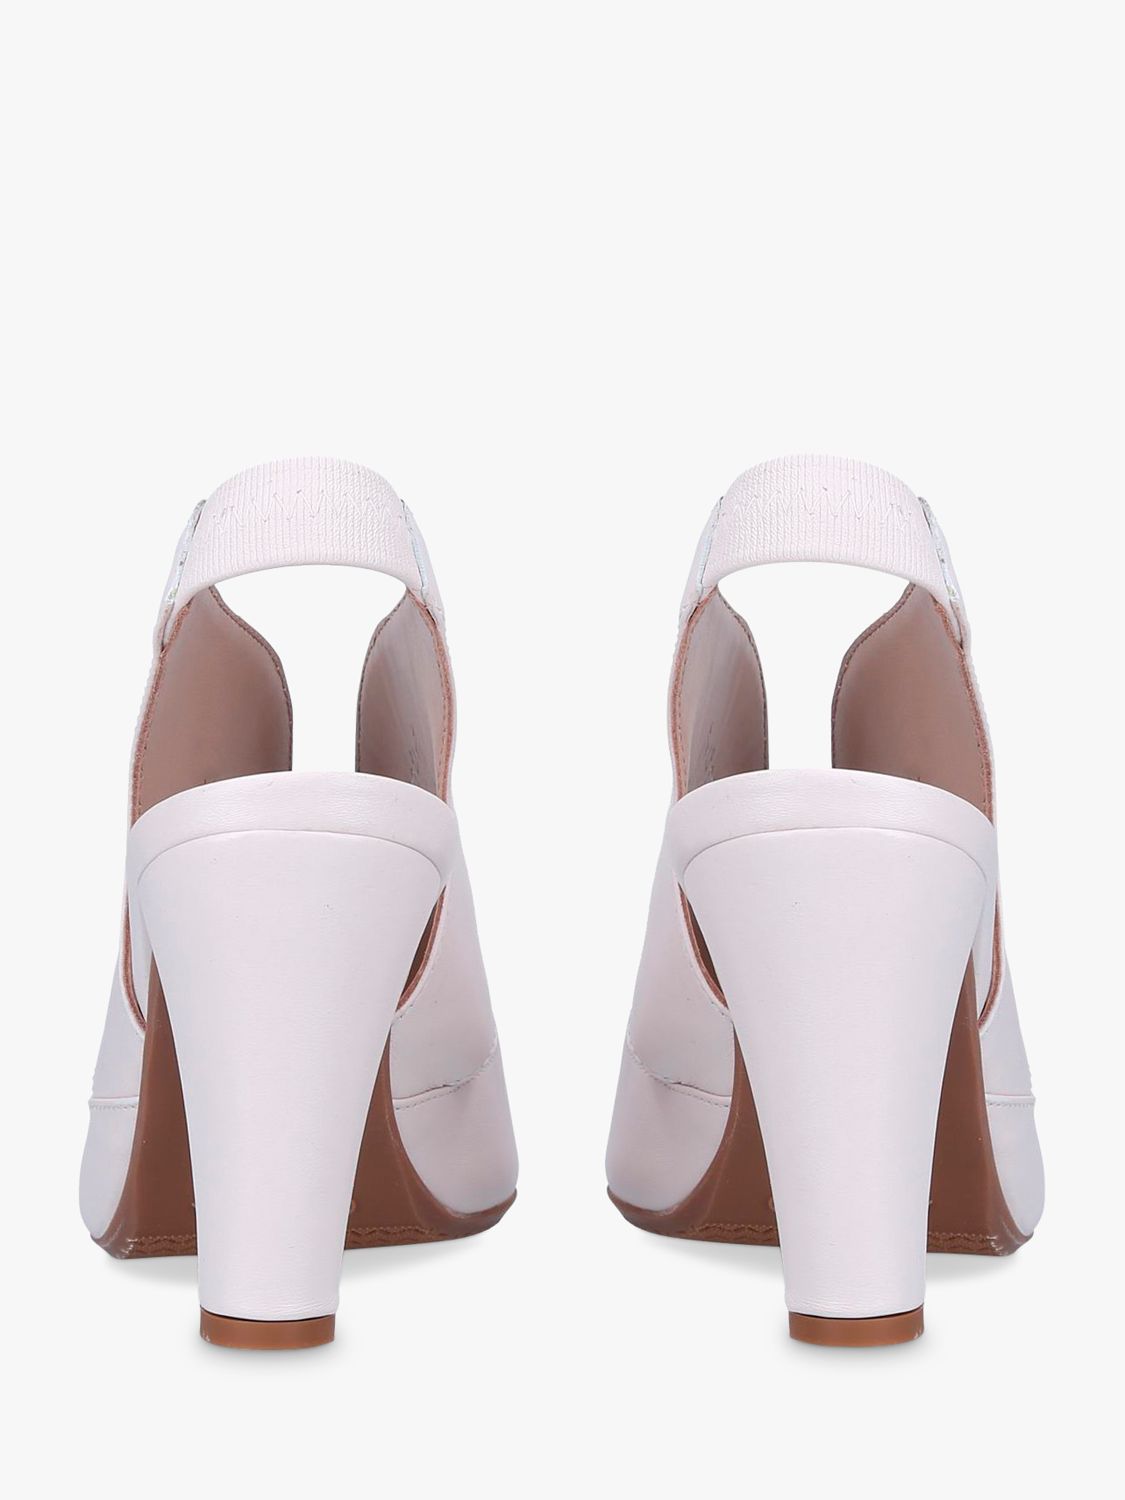 Carvela Arabella Comfort Cone Heel Open Toe Leather Court Shoes, Putty, 3